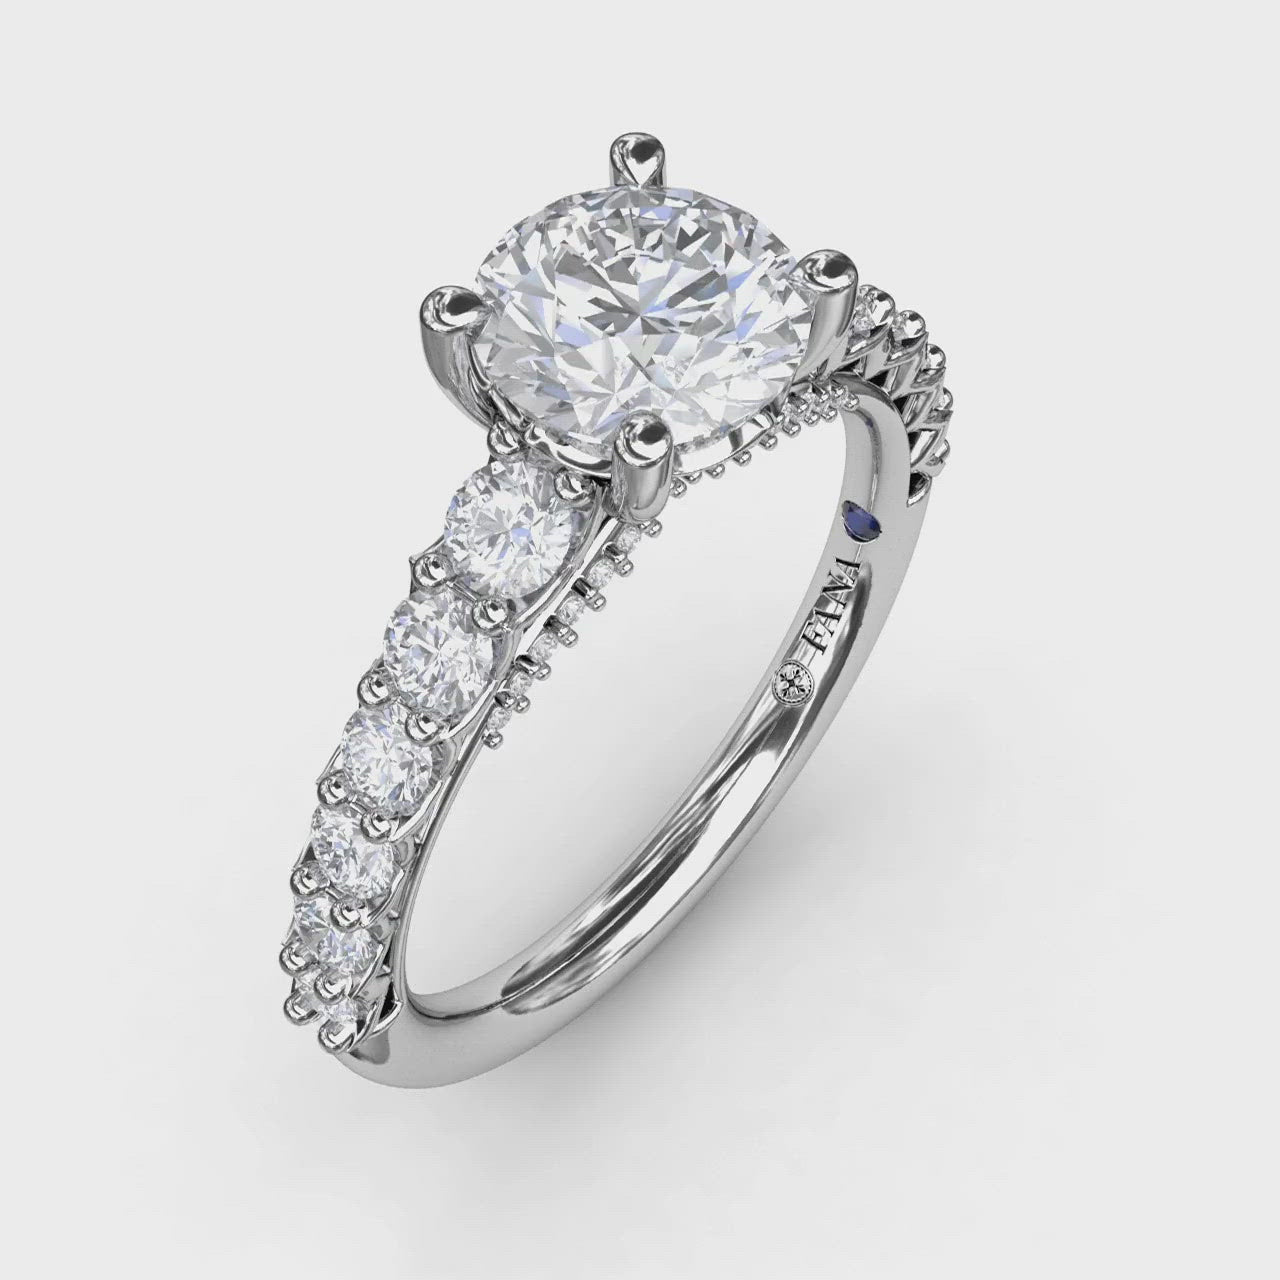 Purchase the High-Quality Men's Diamond Rings | GLAMIRA.com